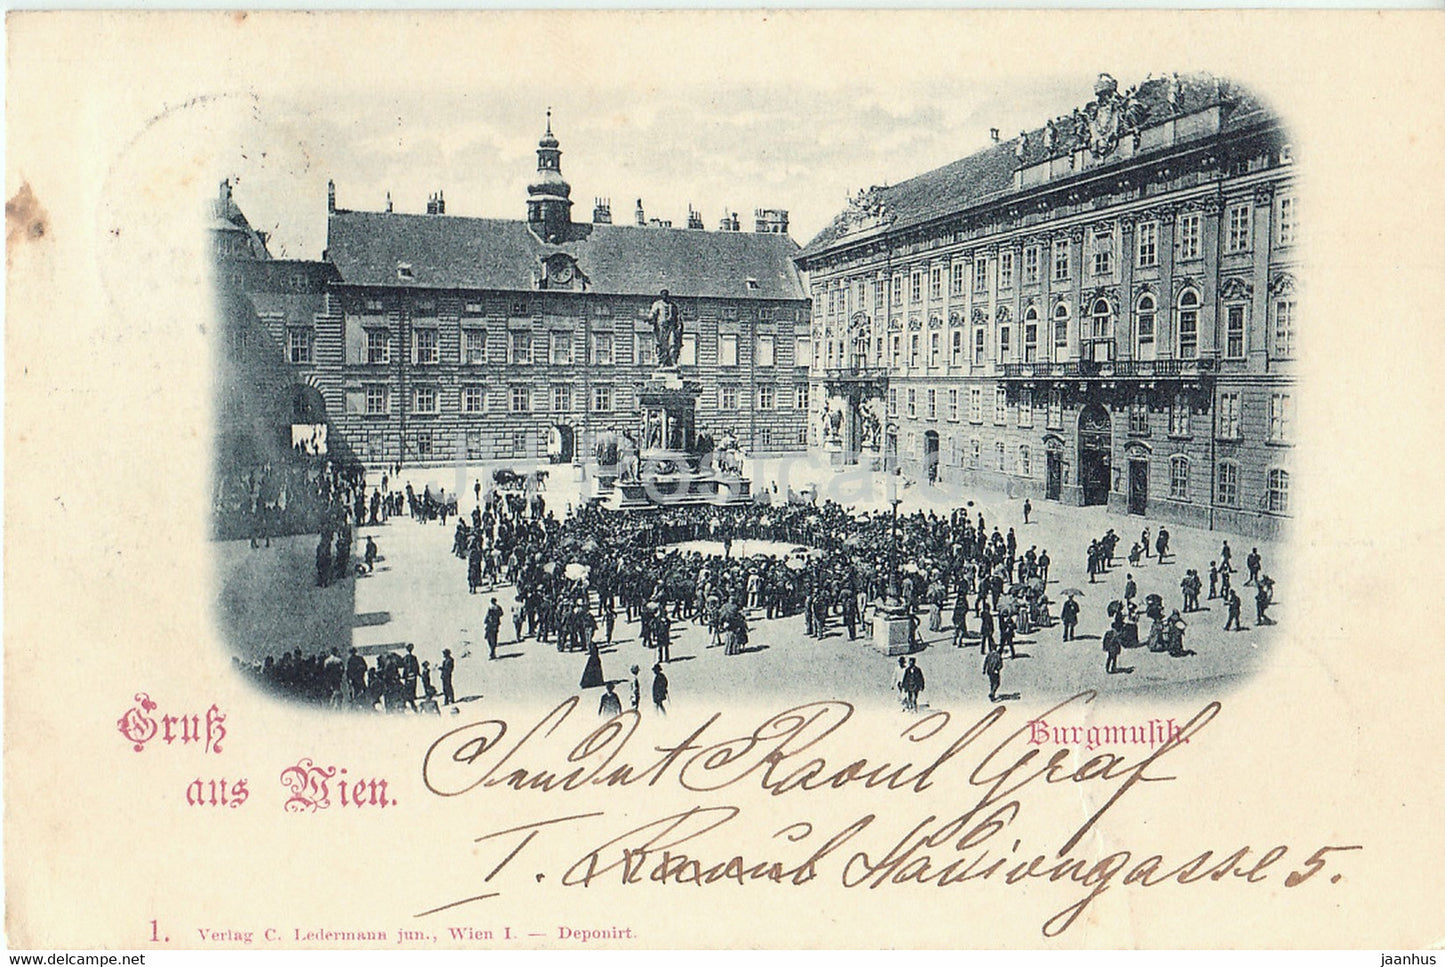 Gruss aus Wien - Vienna - Burgmusik - old postcard - 1897 - Austria - used - JH Postcards